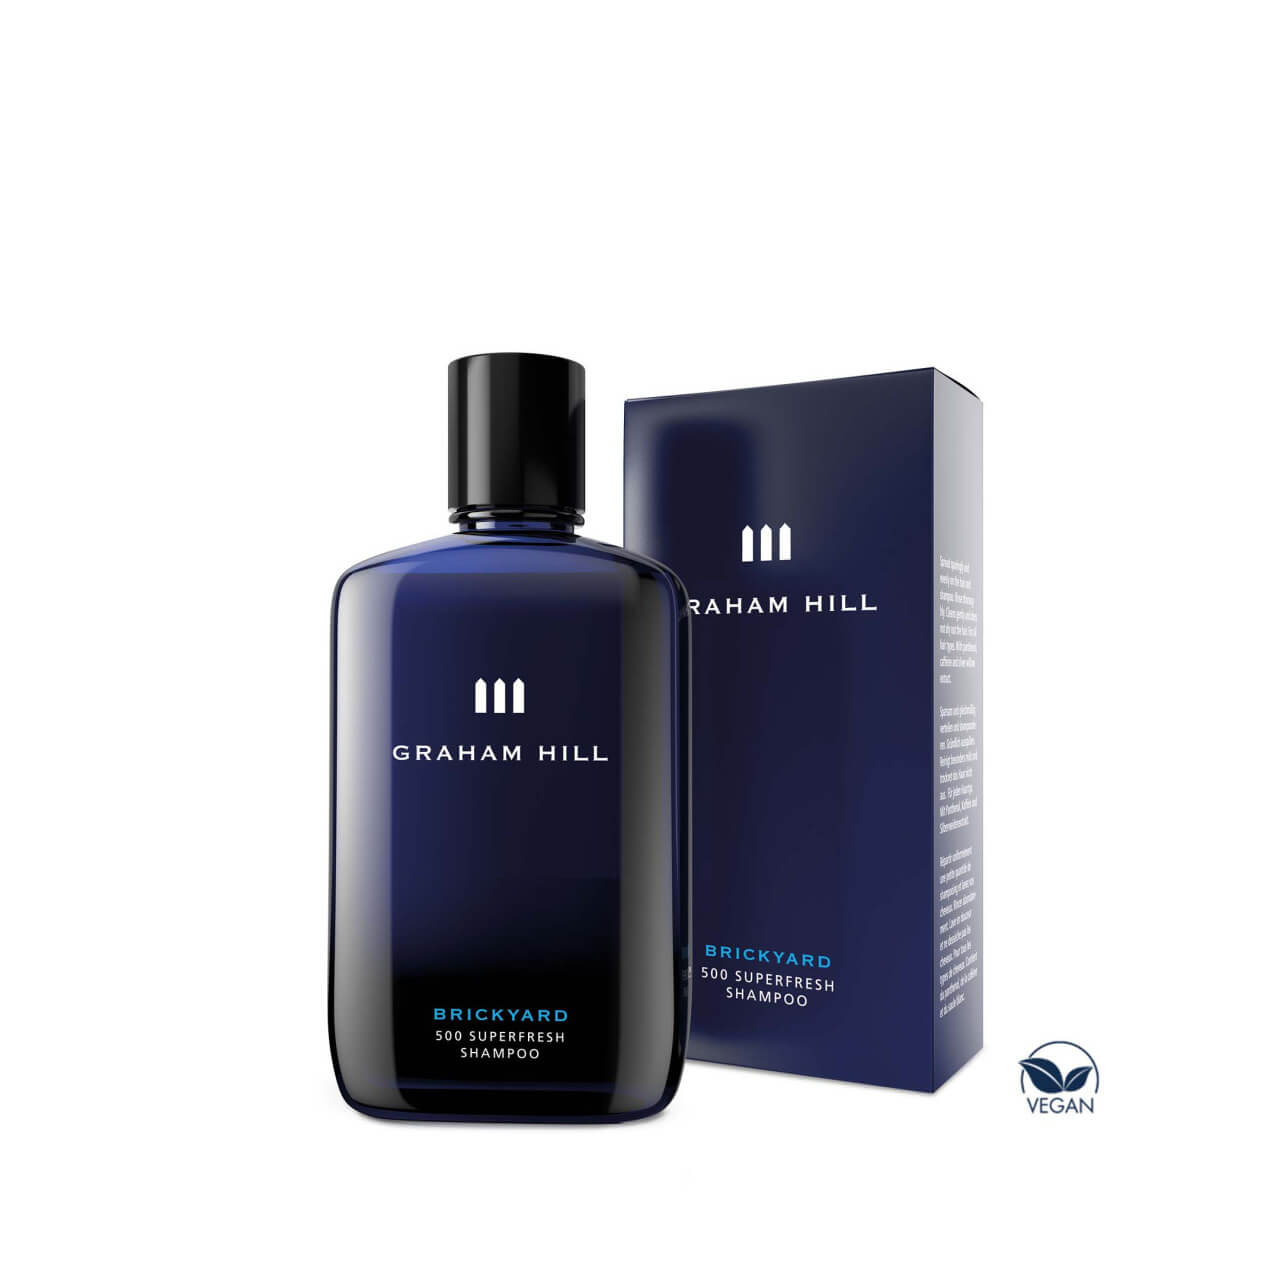 GRAHAM HILL – Brickyard 500 Superfresh Shampoo